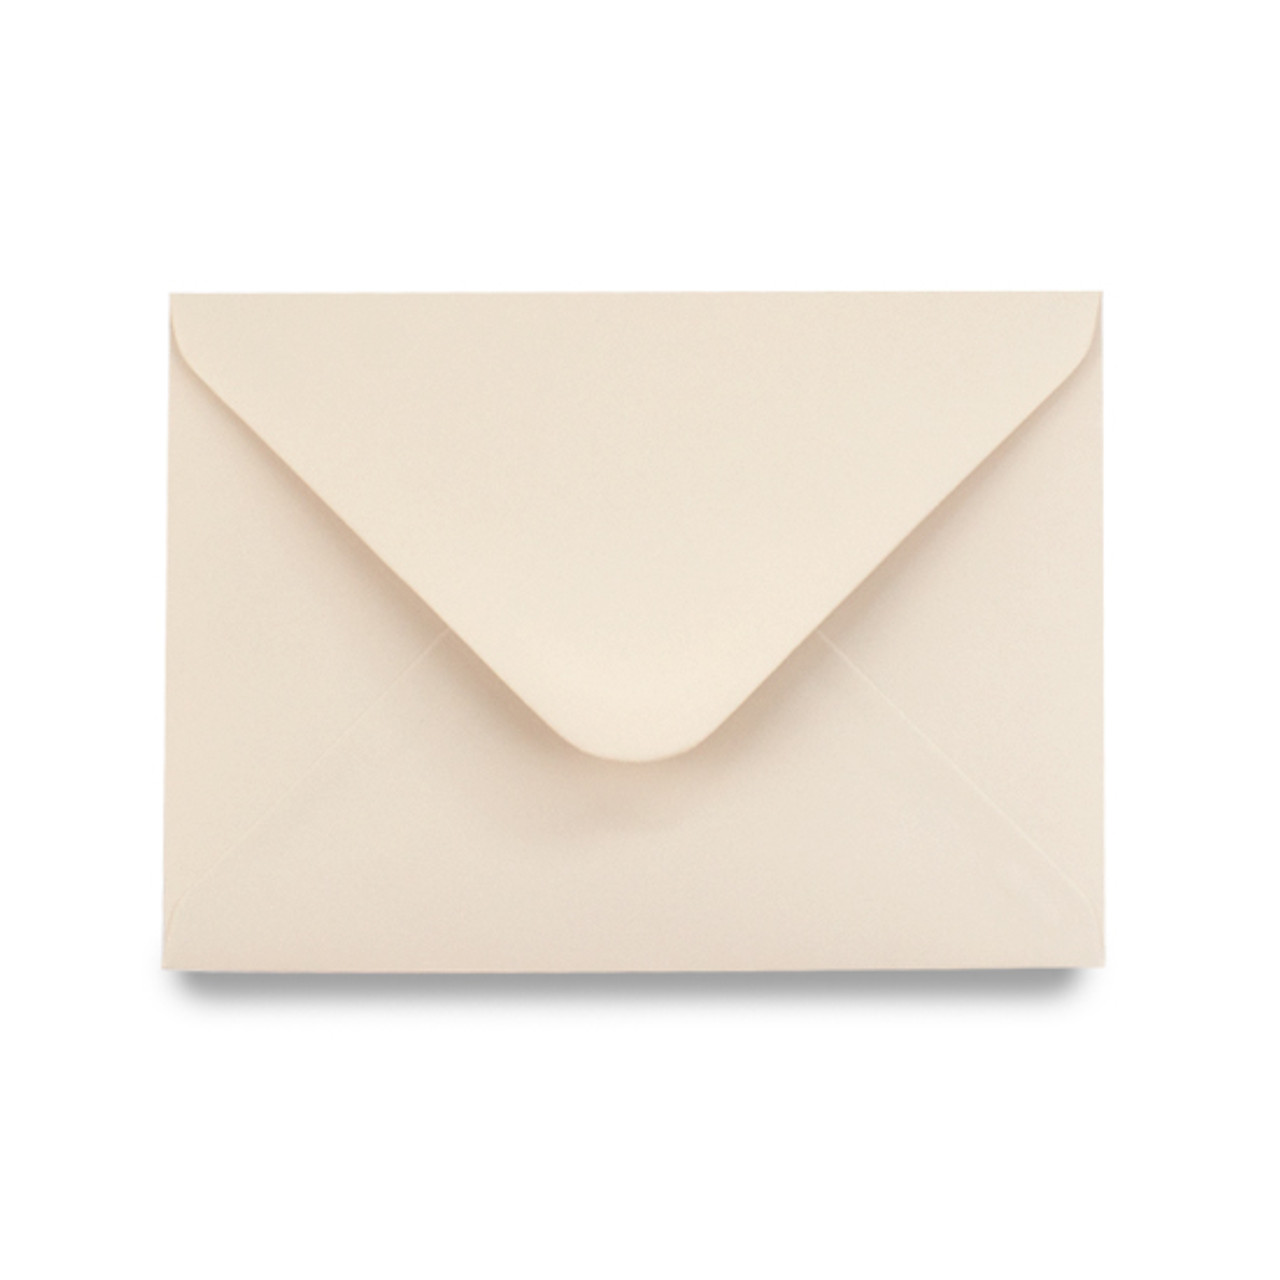 5 x 7 Almond Envelopes | The Paperbox